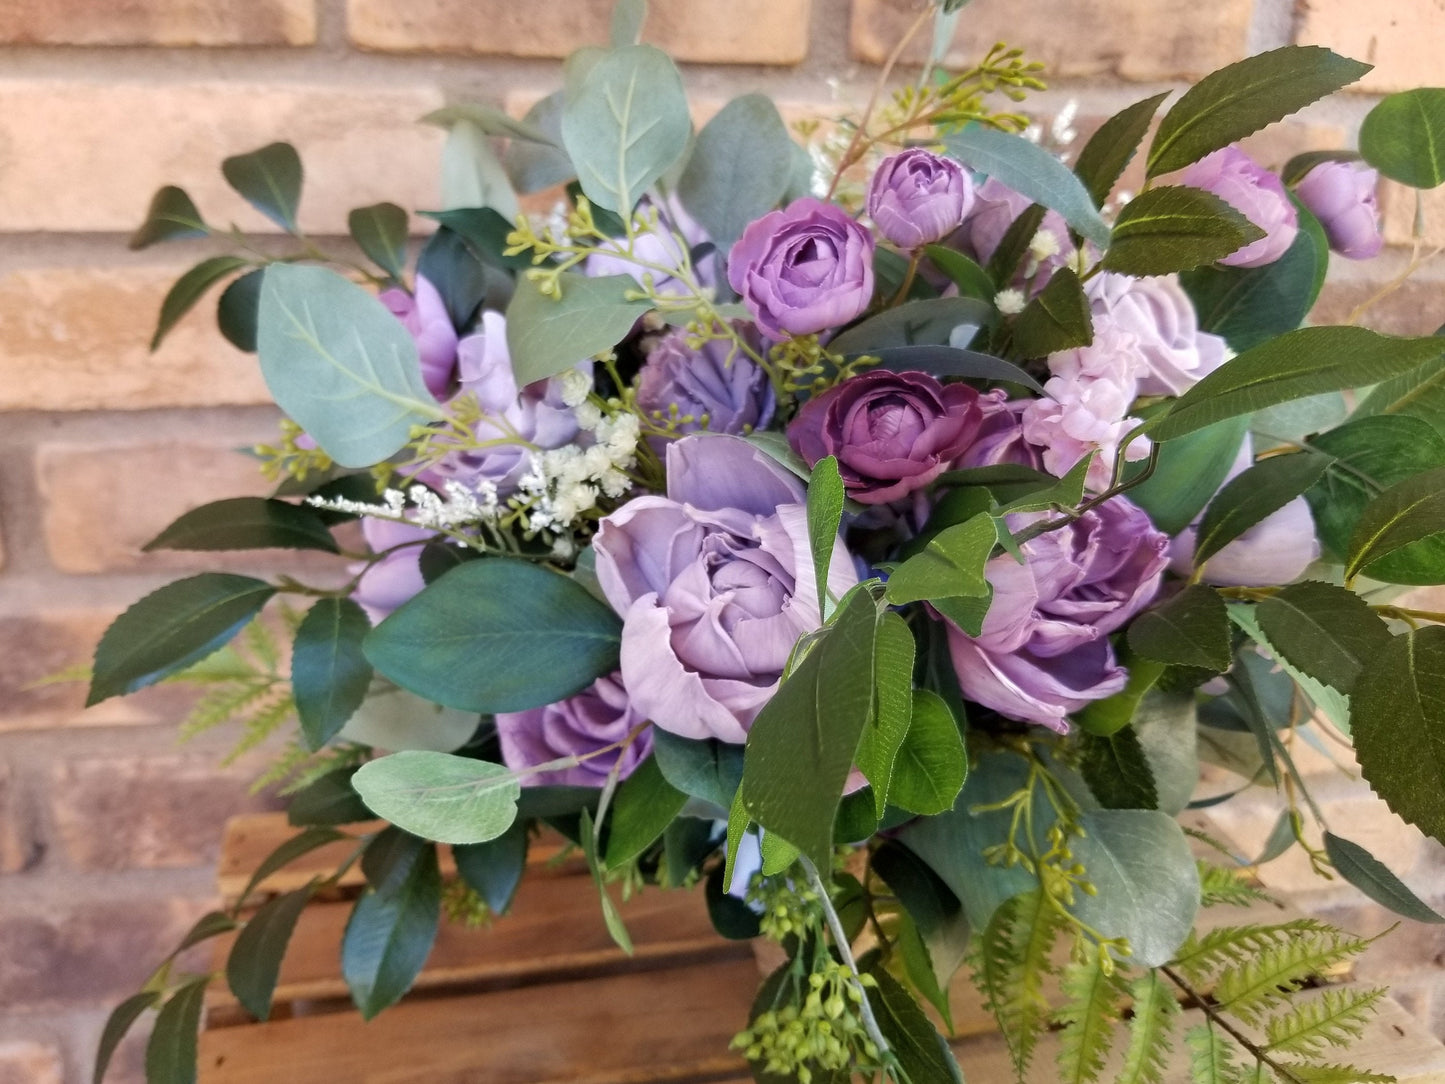 Sola Wood Flower Lavender Bridal Bouquet, Lilac and Lavender Wedding Flowers